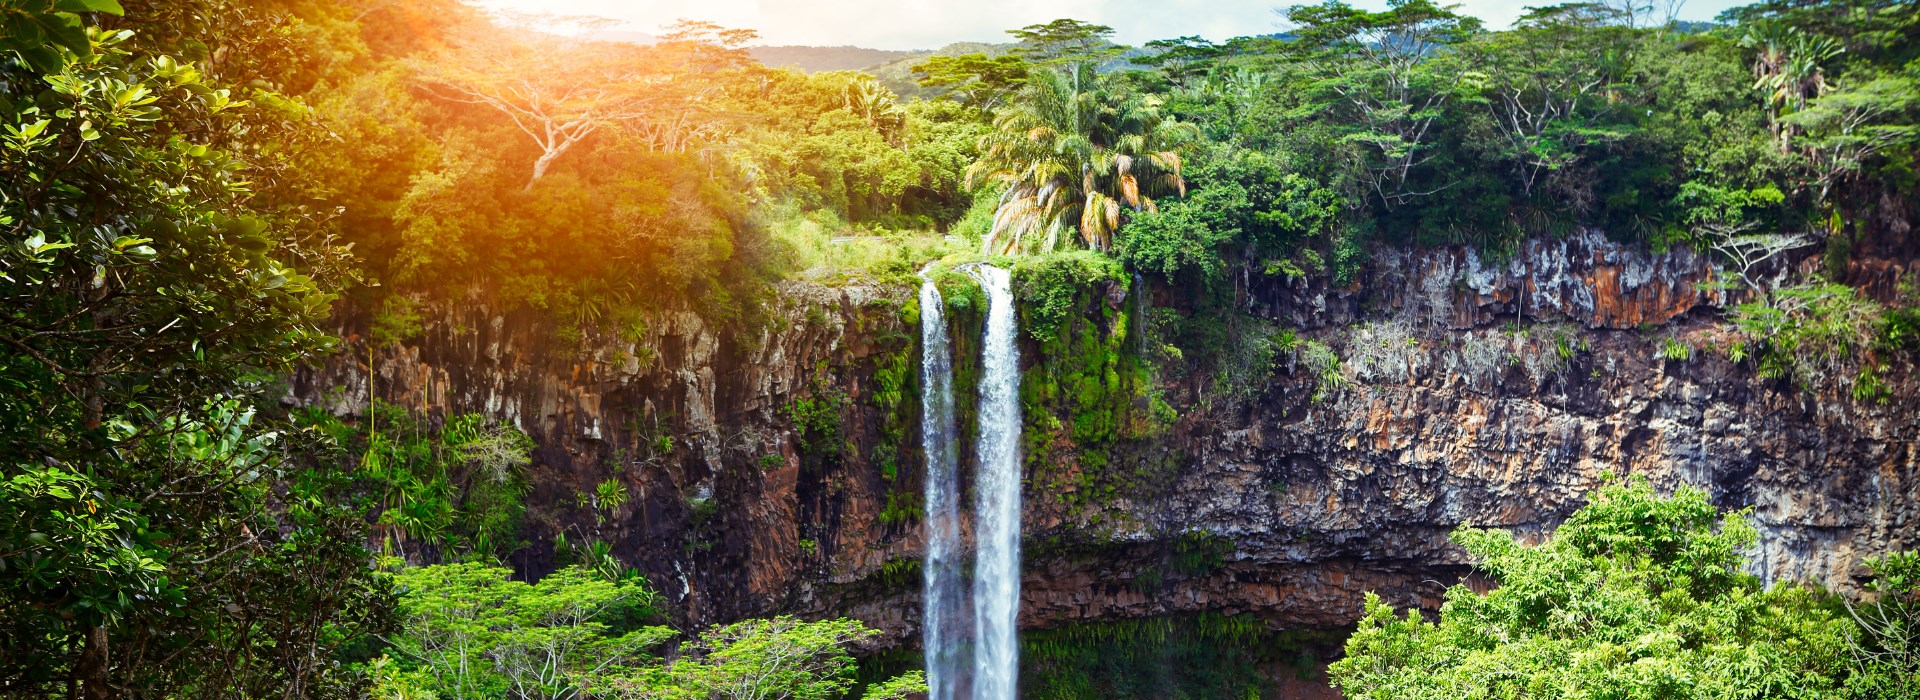 Visiter Les cascades de Tamarin - Ile Maurice